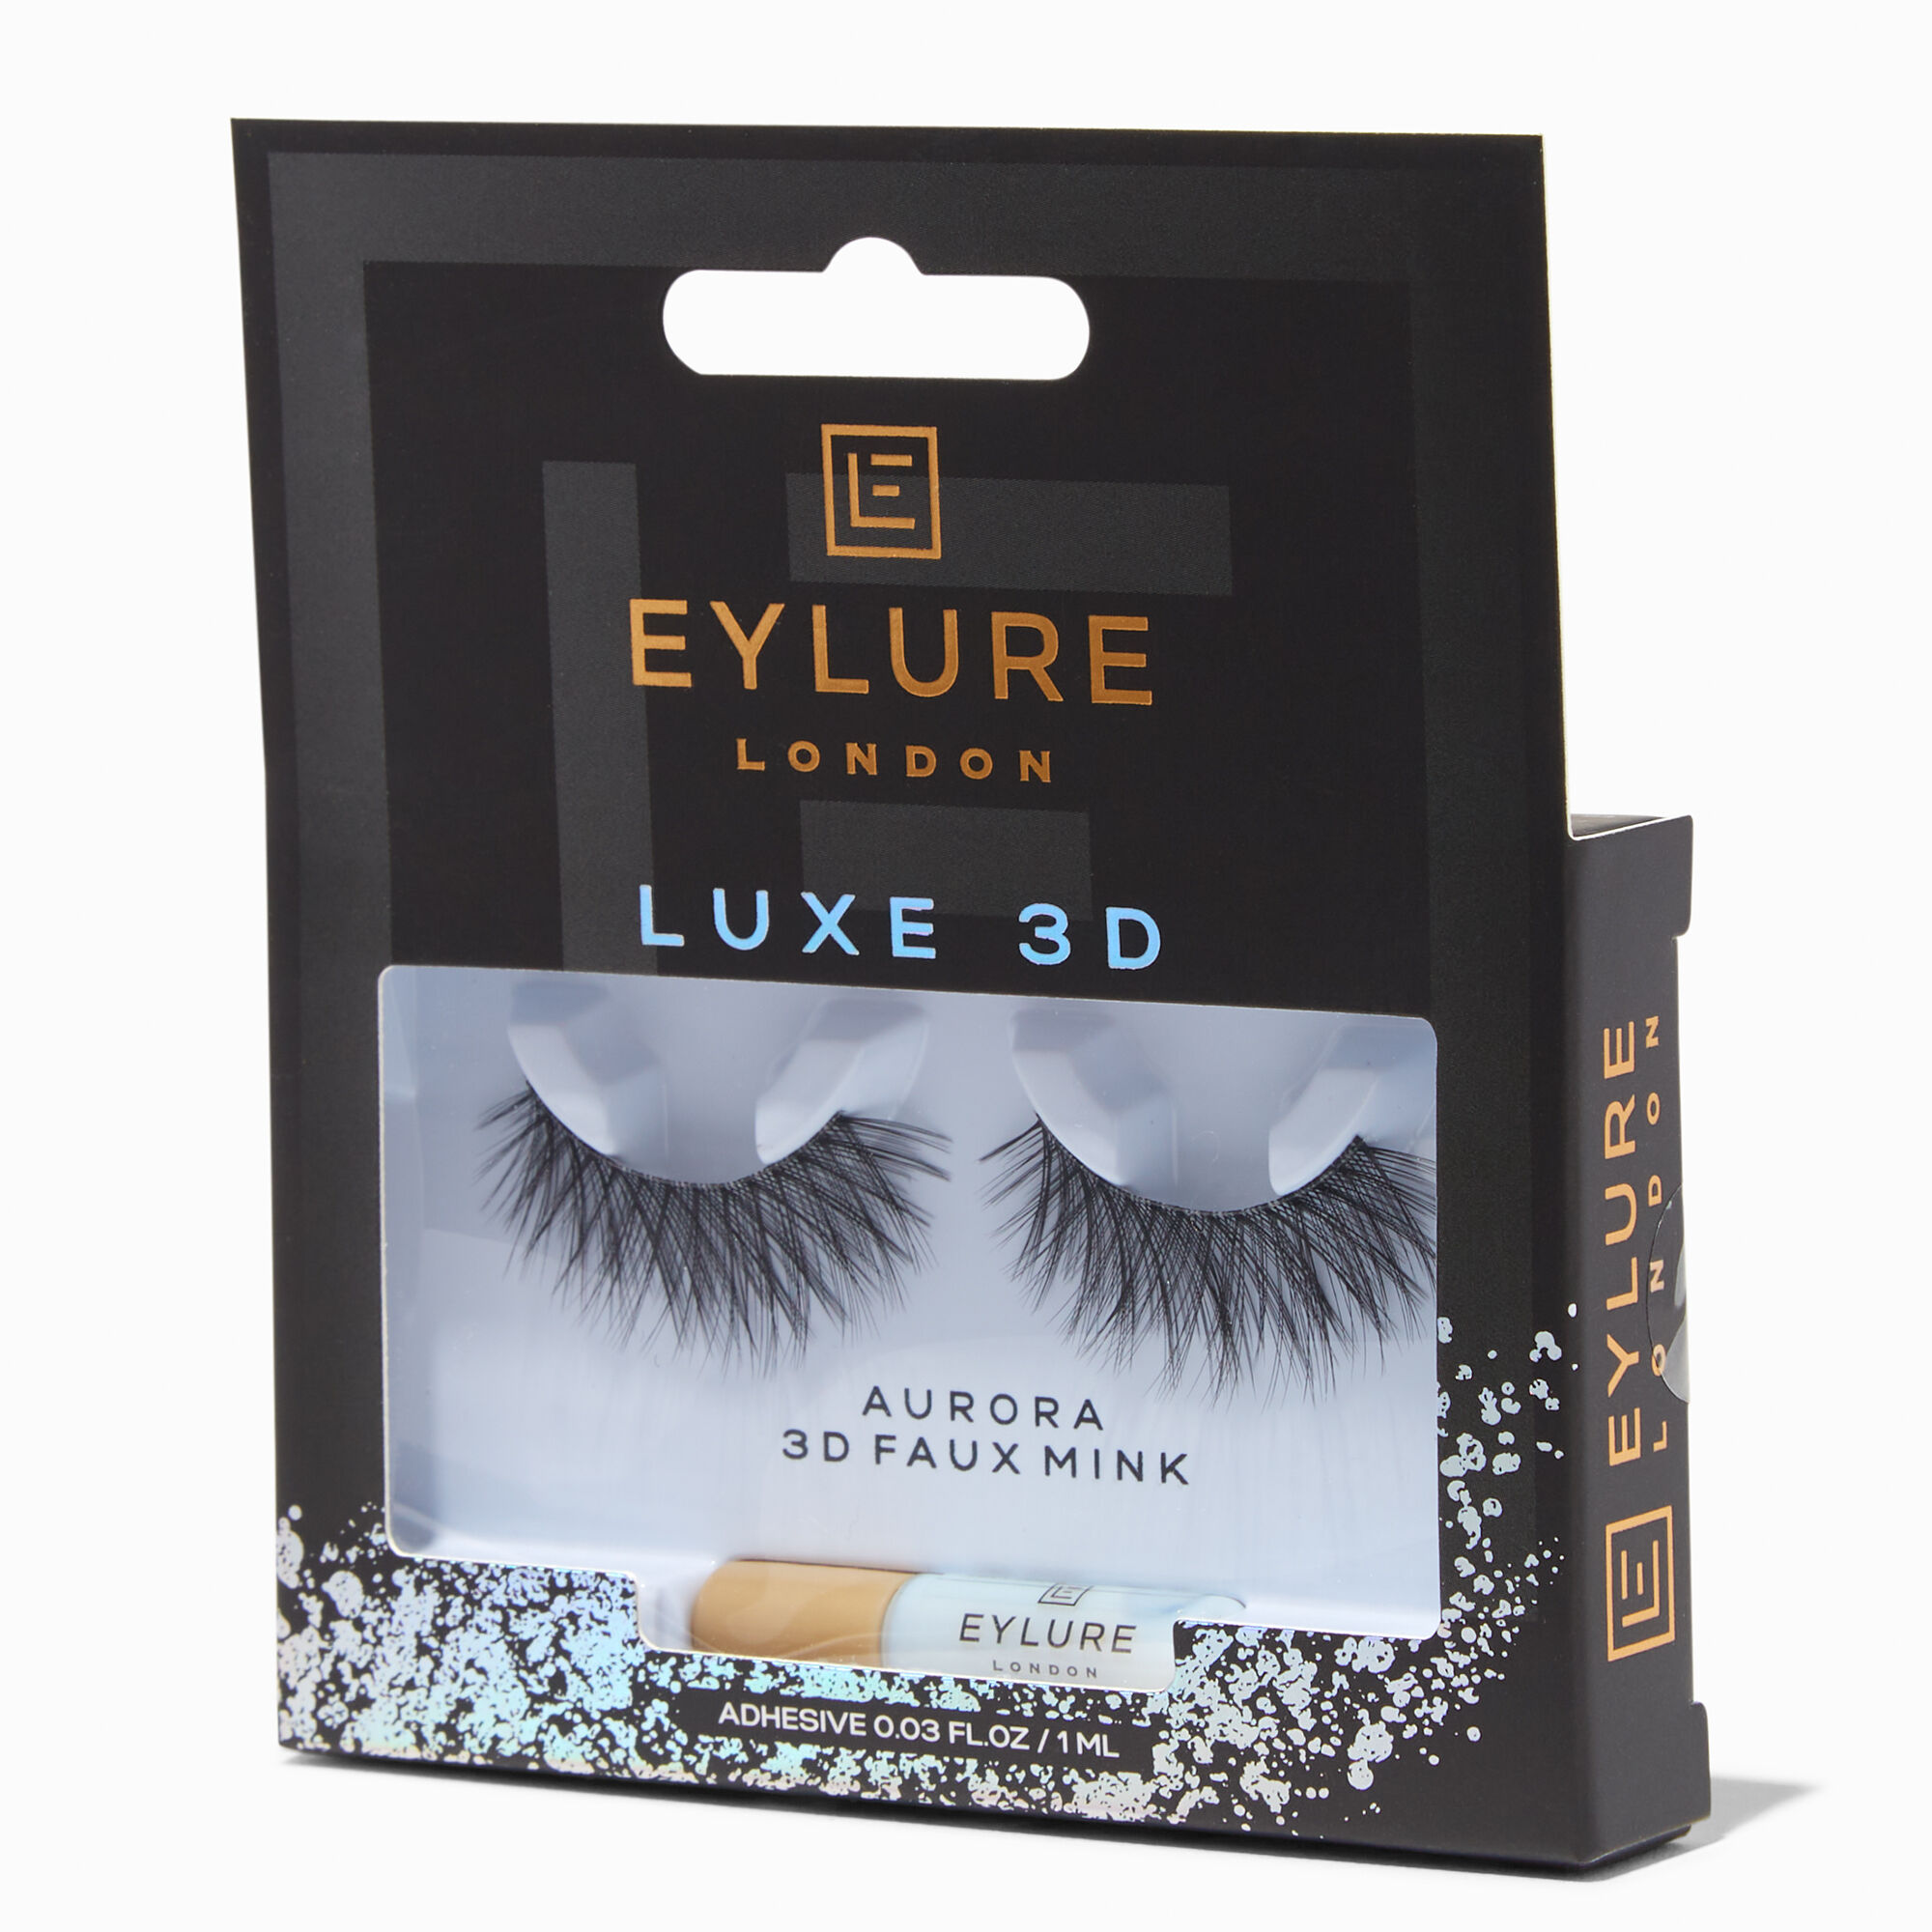 View Claires Eylure Luxe 3D Faux Mink Eyelashes Aurora Black information